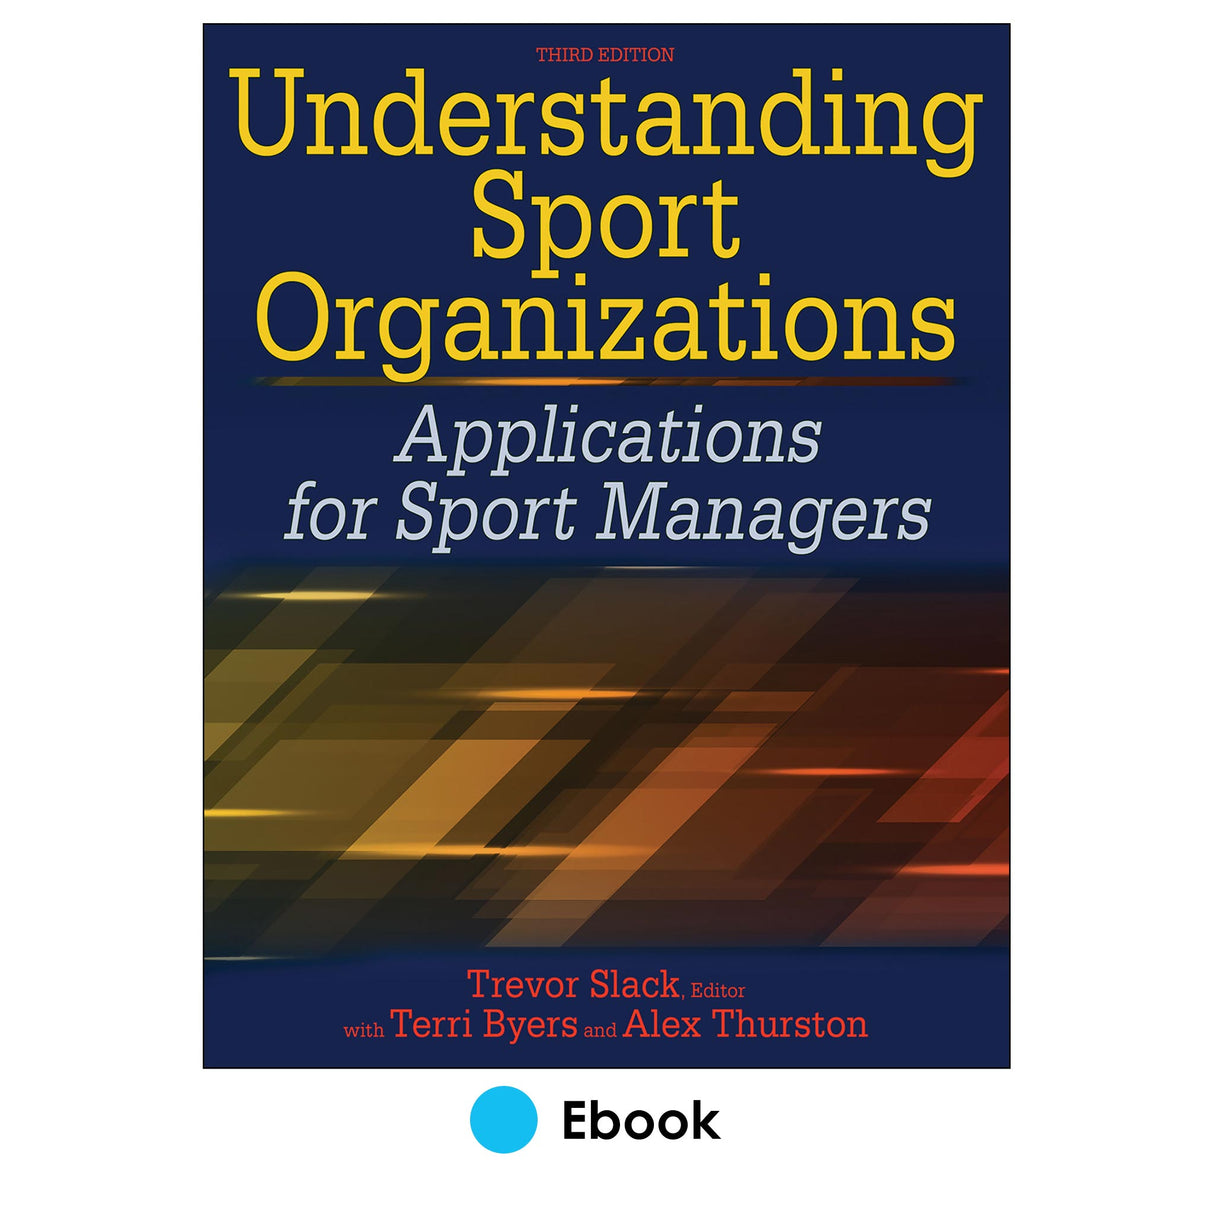 Understanding Sport Organizations 3rd Edition epub